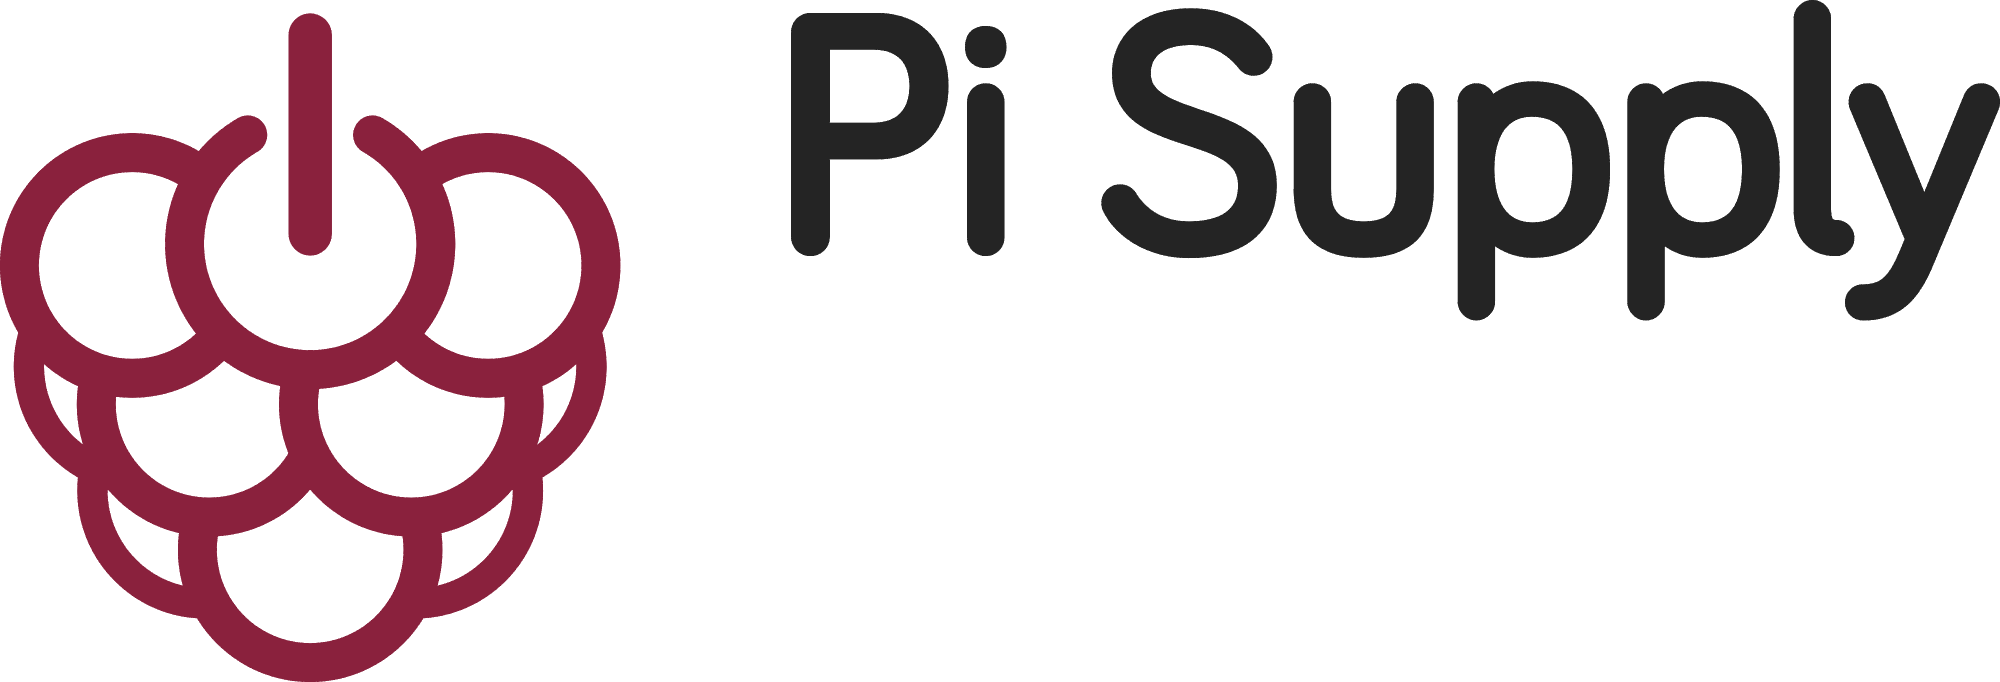 Pi Supply